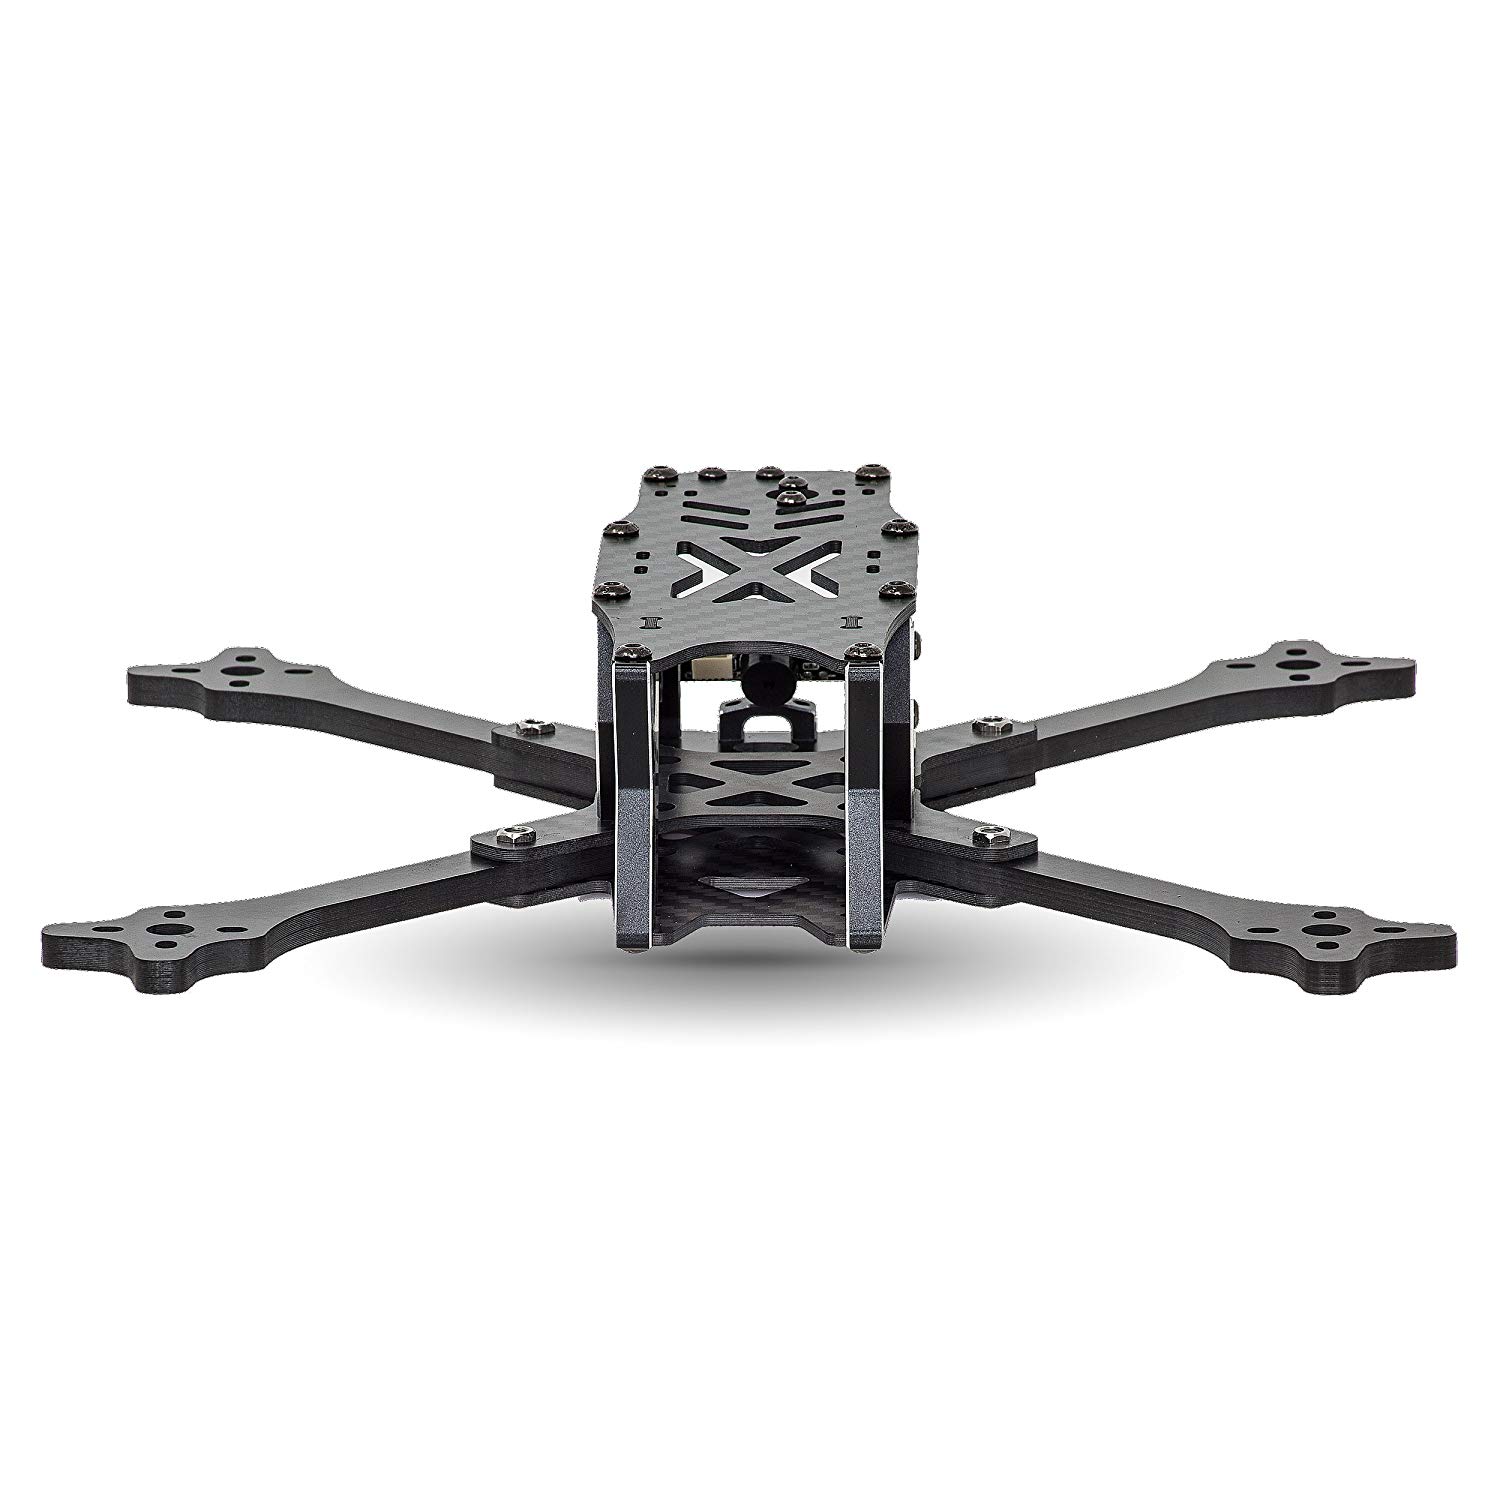 DJI Goggles Racing Edition Part27 OcuSync FPV Racing Quadcopter Drone Frame Kit